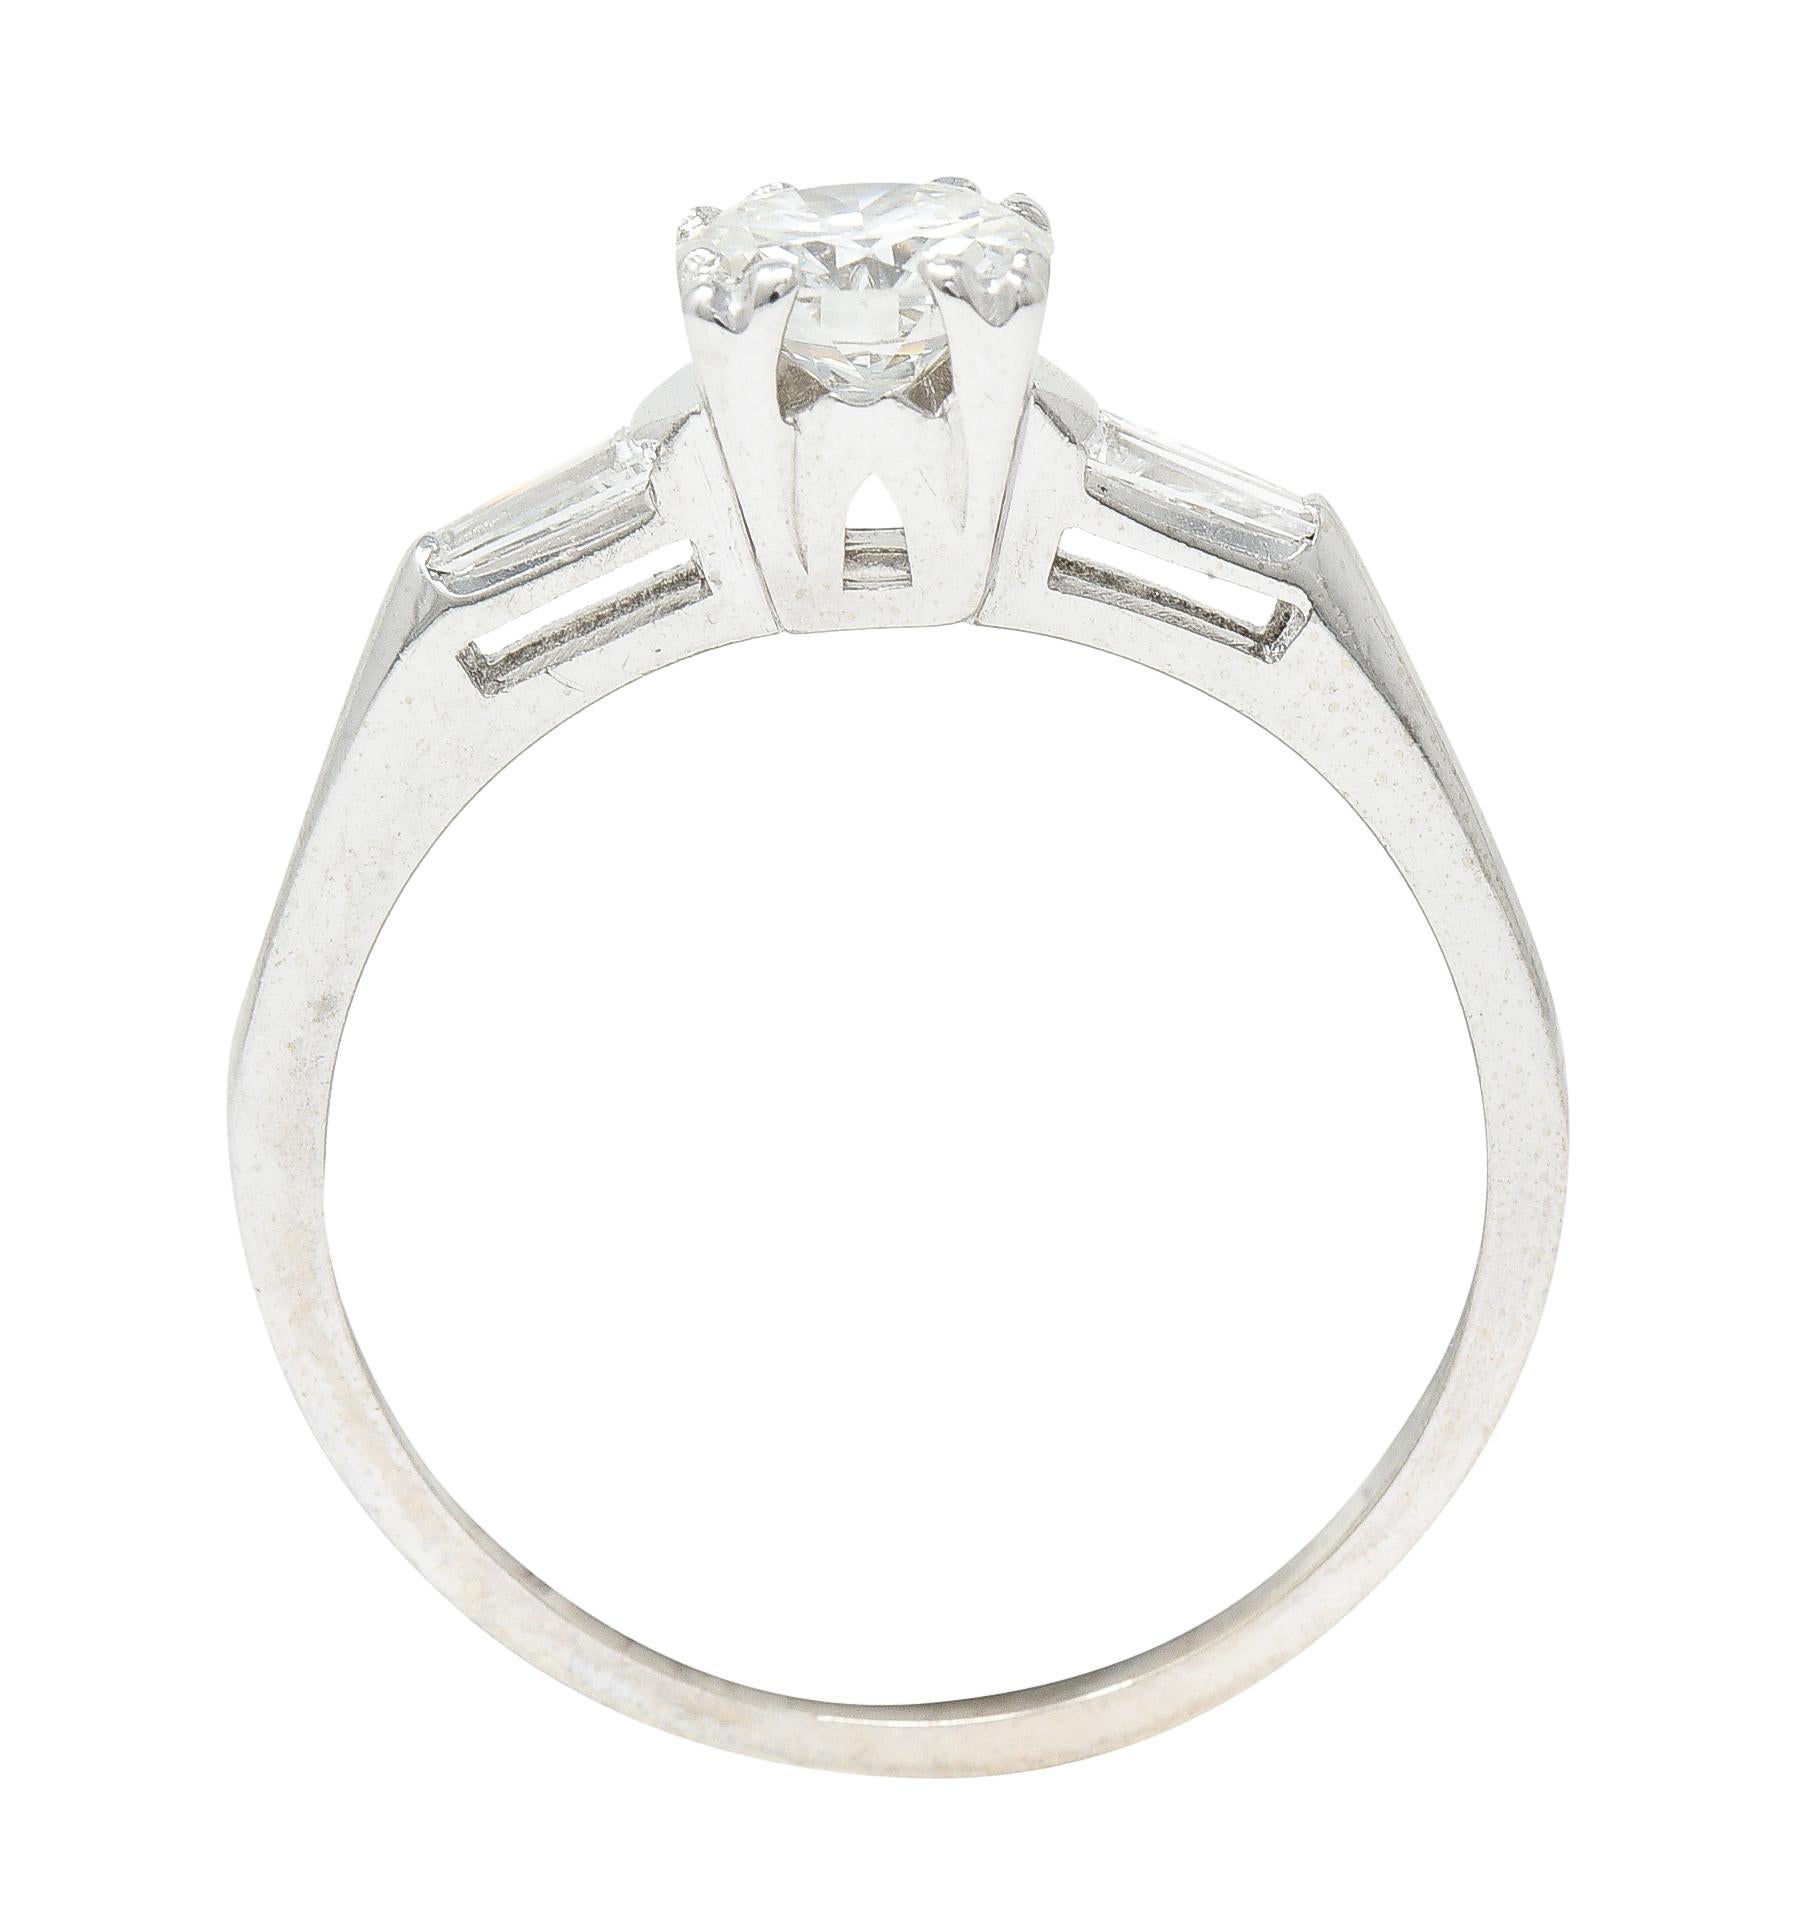 1950's Mid-Century 0.76 Carat Transitional Cut Diamond 14 Karat Engagement Ring For Sale 1